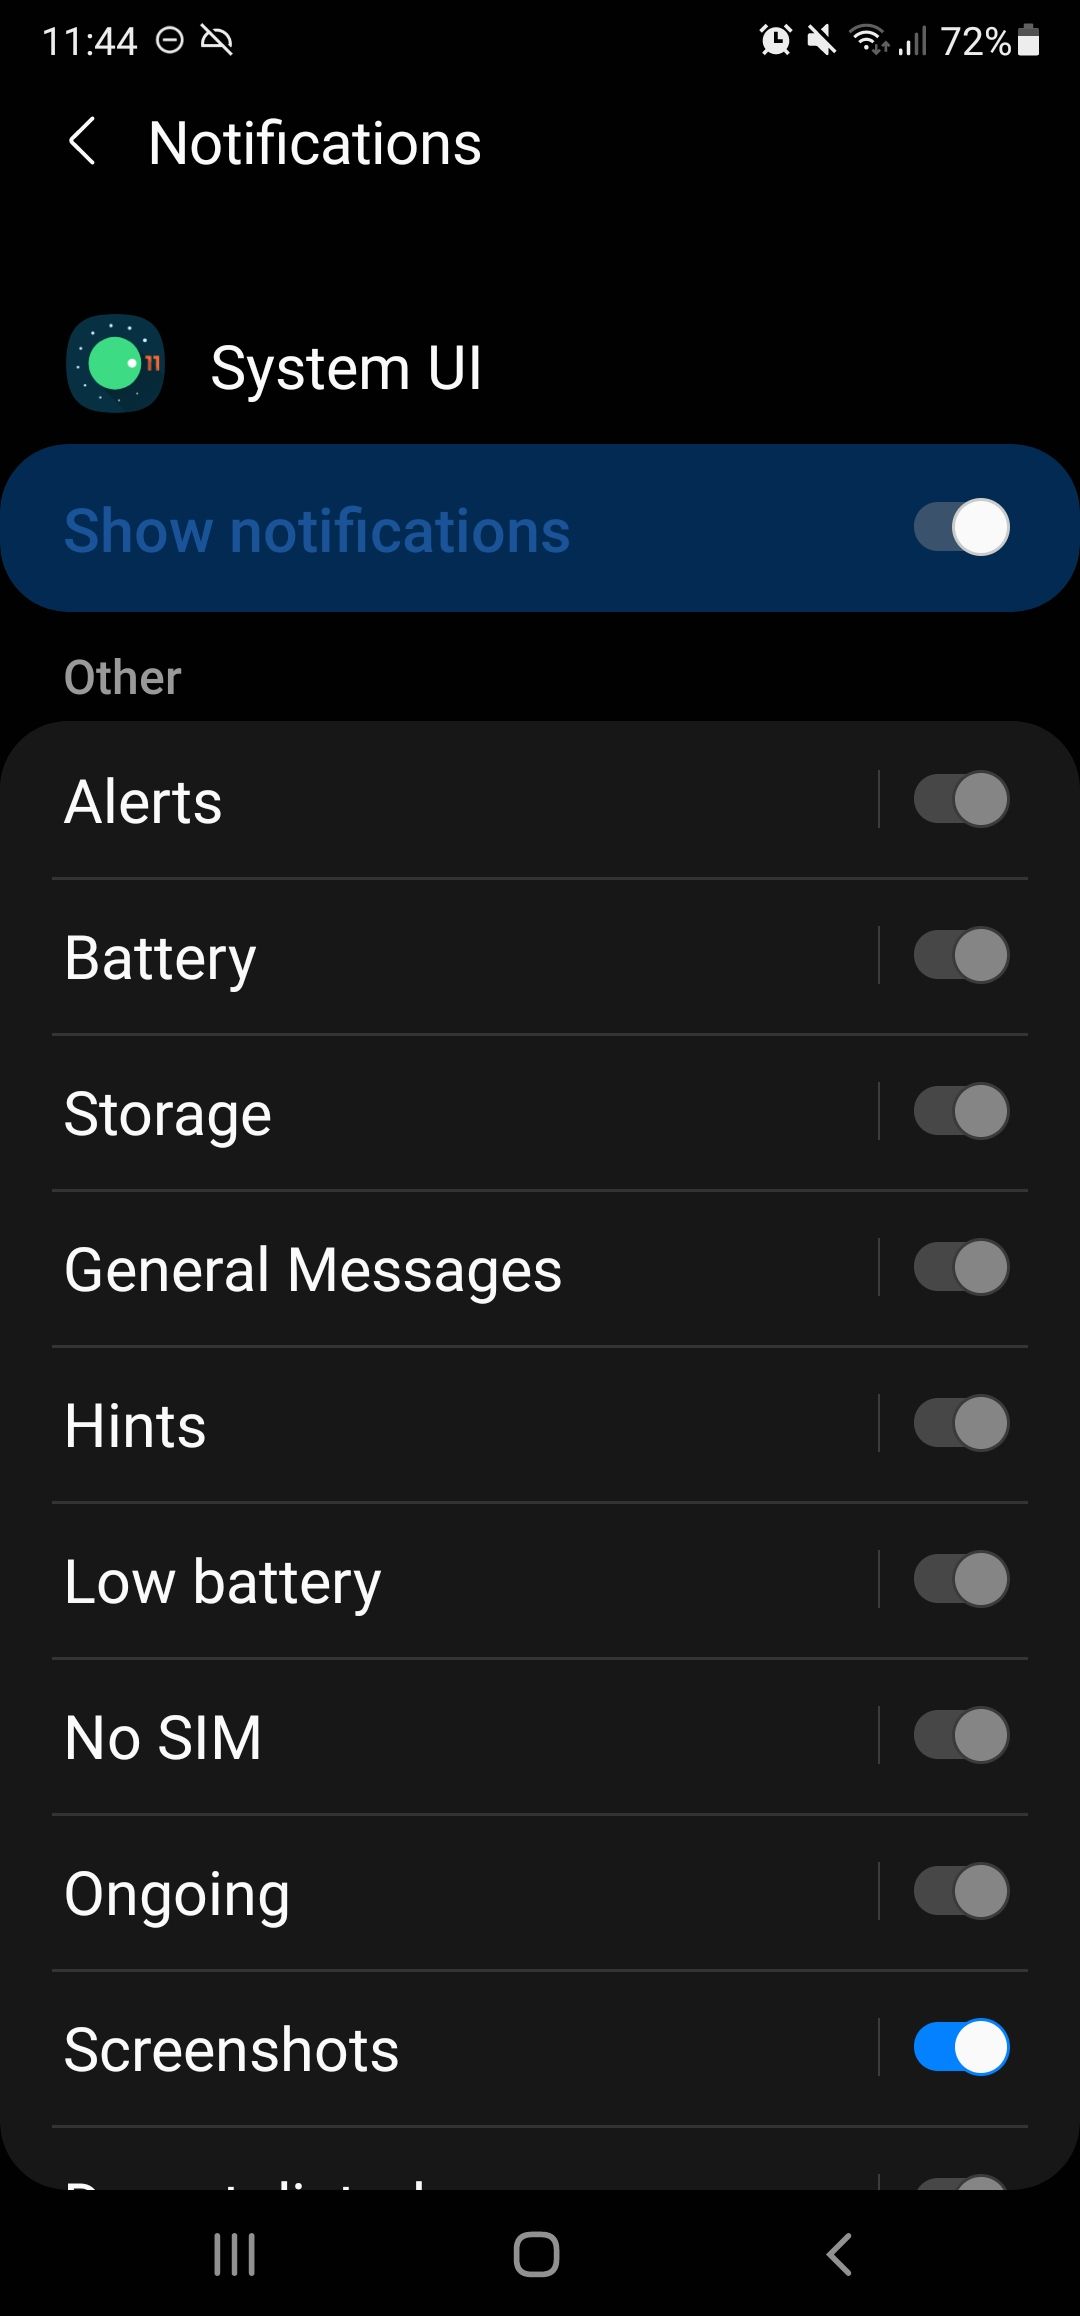 System UI notifications - Samsung Community